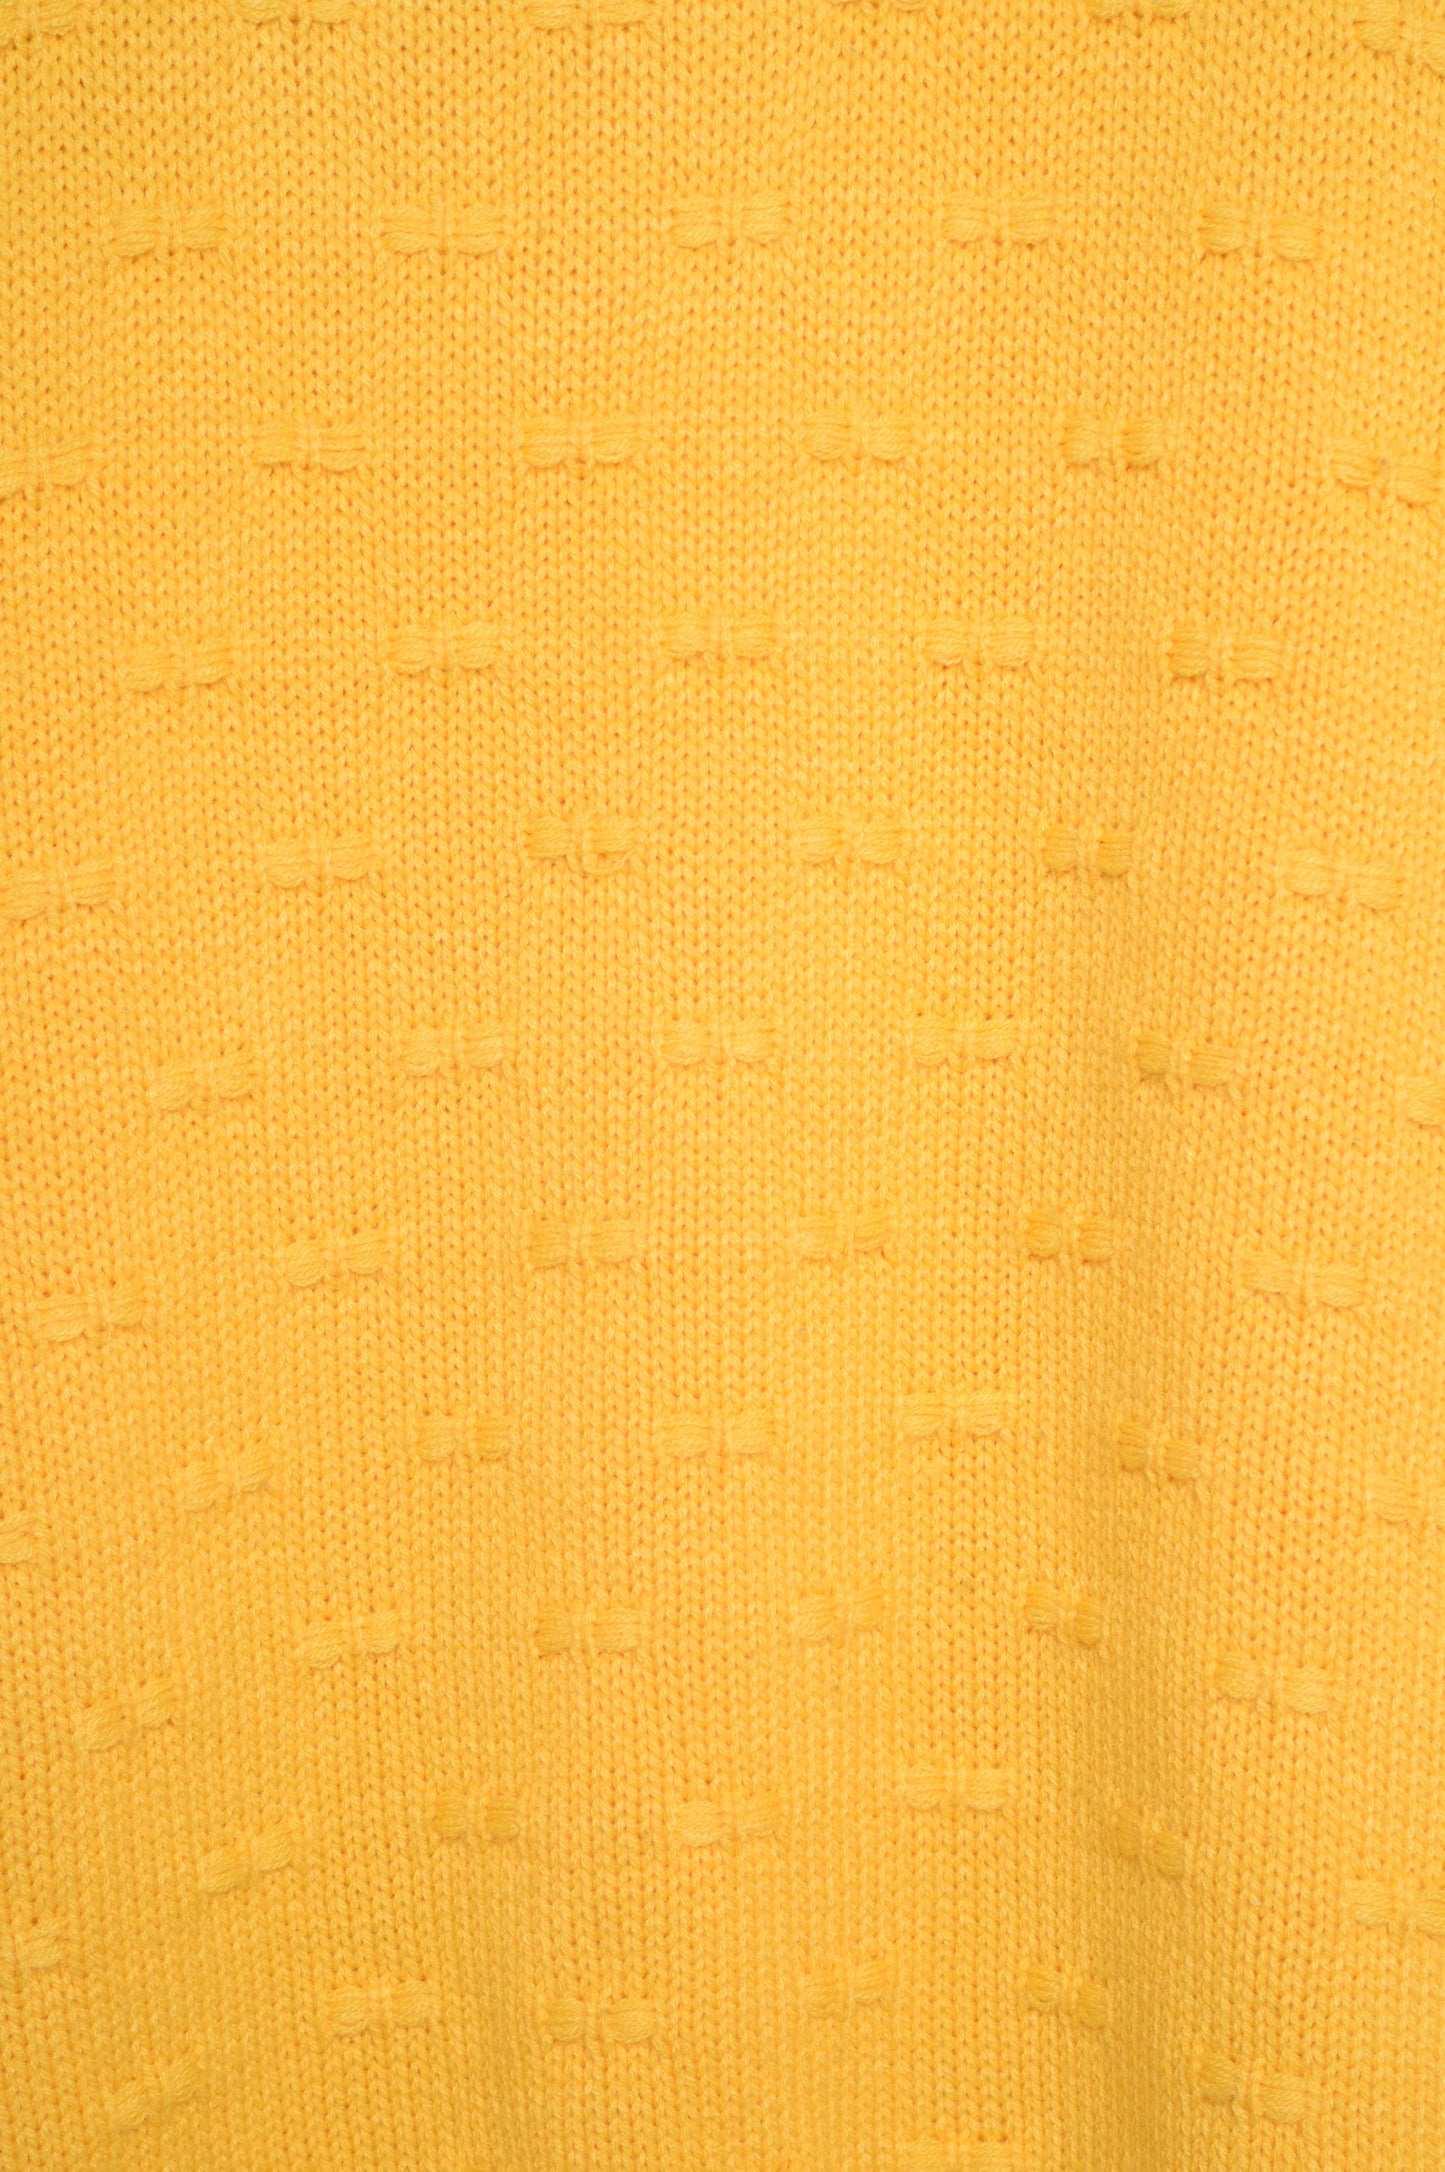 1980s Yellow Textured Sweater USA